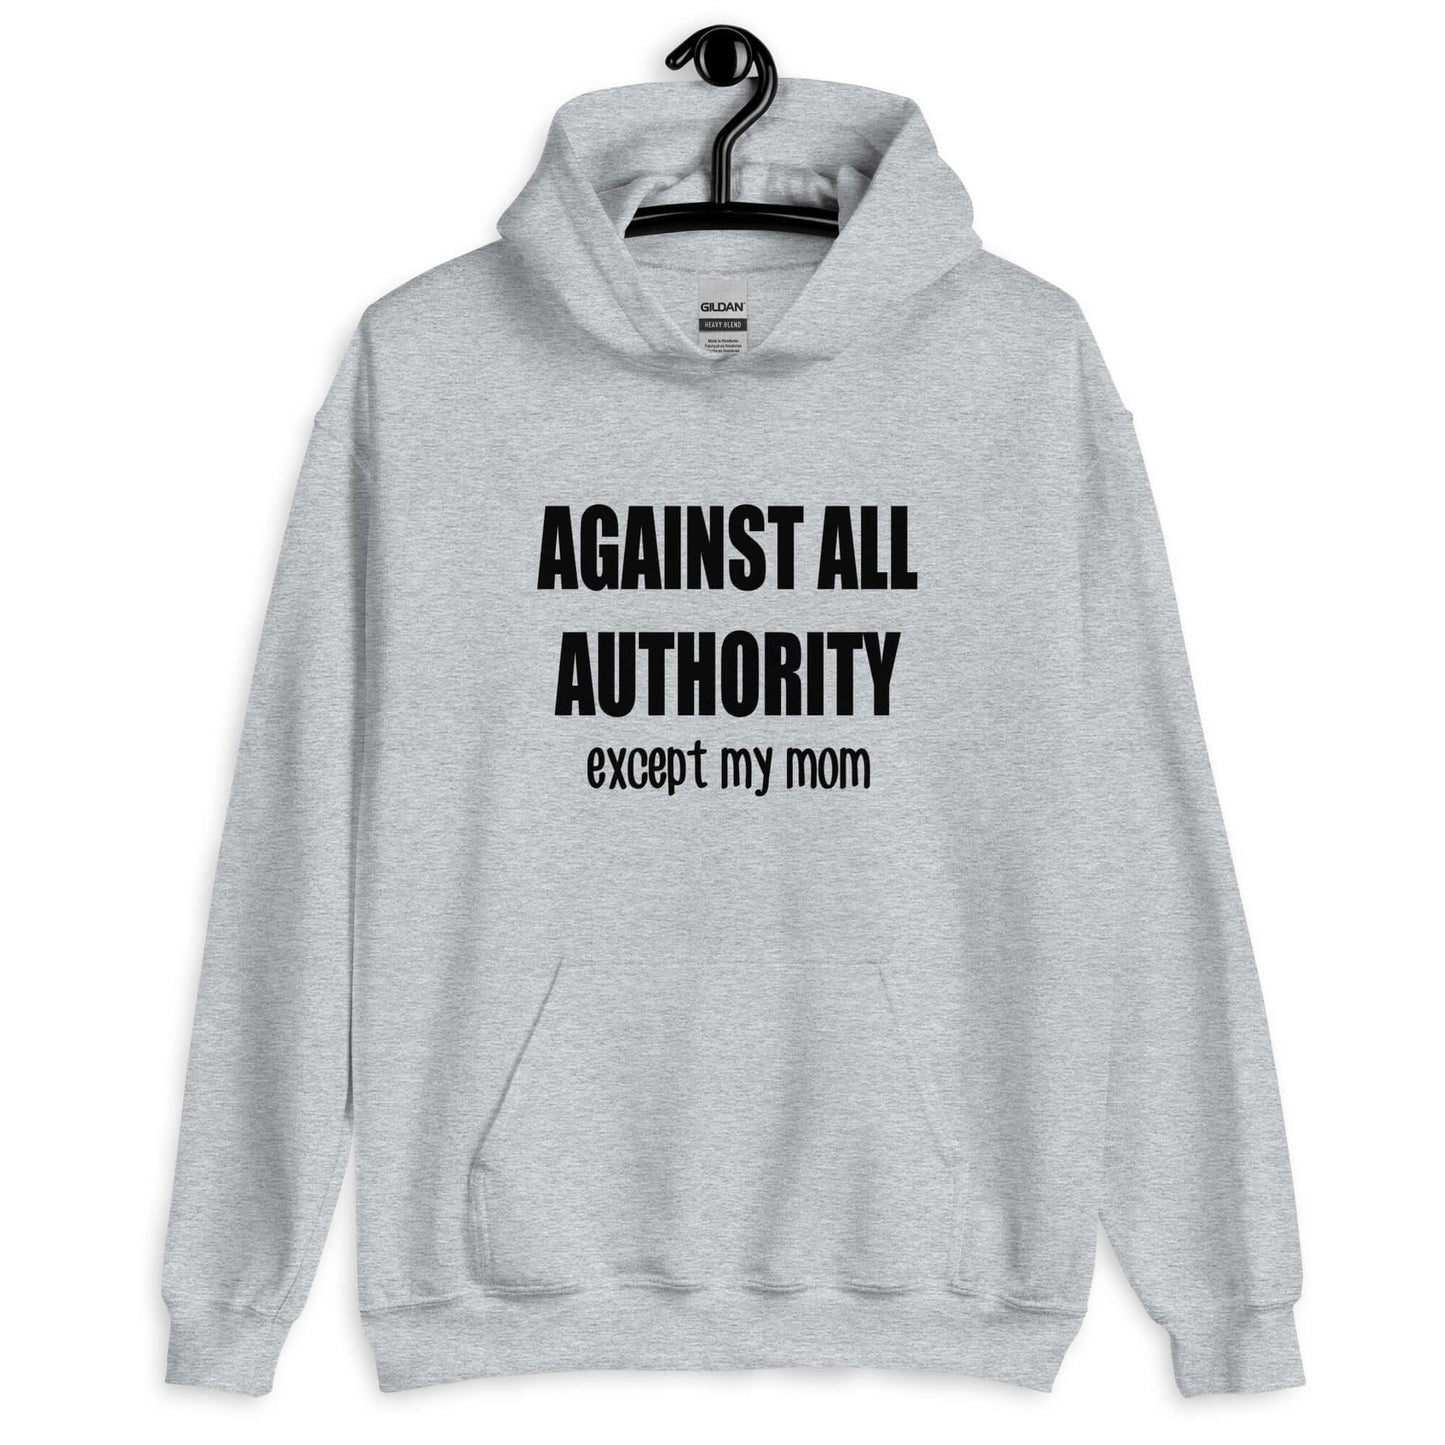 Against all authority except my mom hoodie sweatshirt